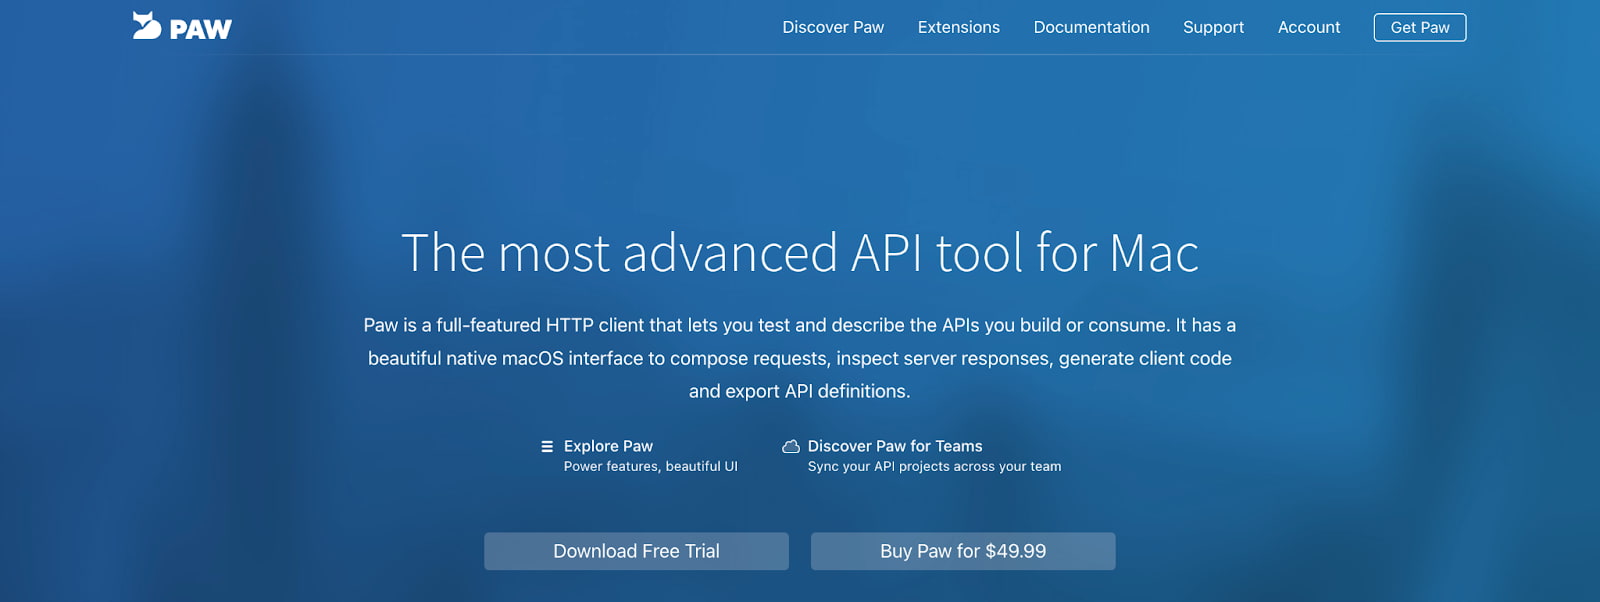 API testing tools, Paw